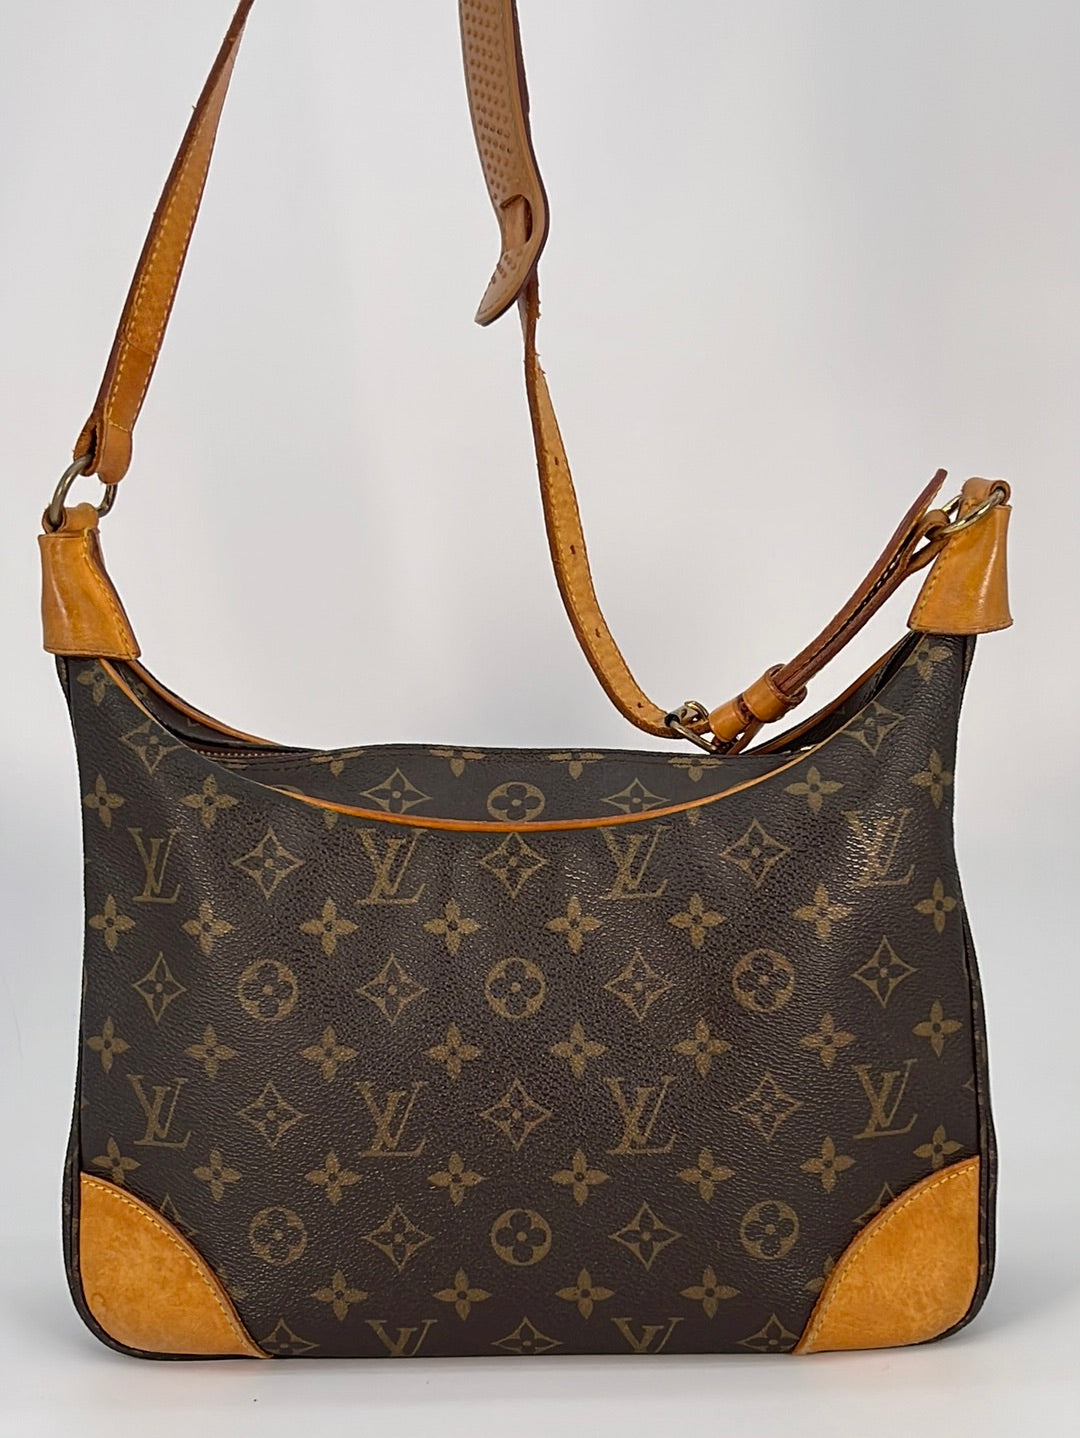 Preloved Louis Vuitton Boulogne 30 Handbag Monogram Canvas DXJRDT7 032823 - $200 OFF FLASH SALE